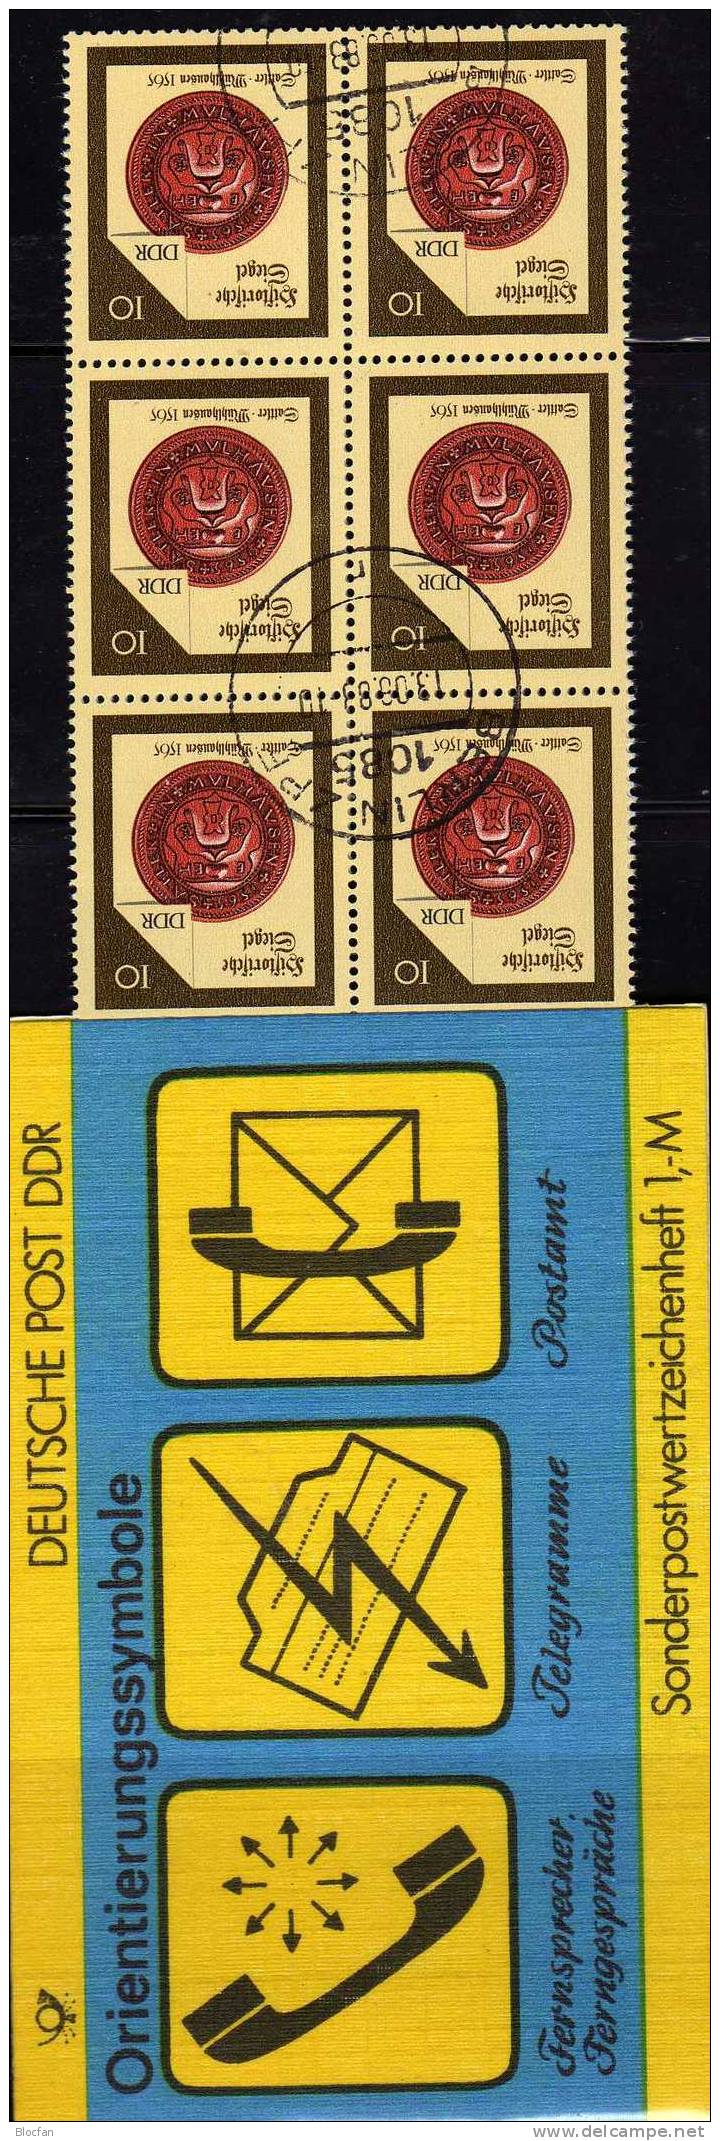 SMH 32 Orientierungs-Sympole Der Post 1987 Telefon Telegramm Fax DDR 10x3156 + SMHD32 O 8€ Mit Siegel Booklet Of Germany - Carnets